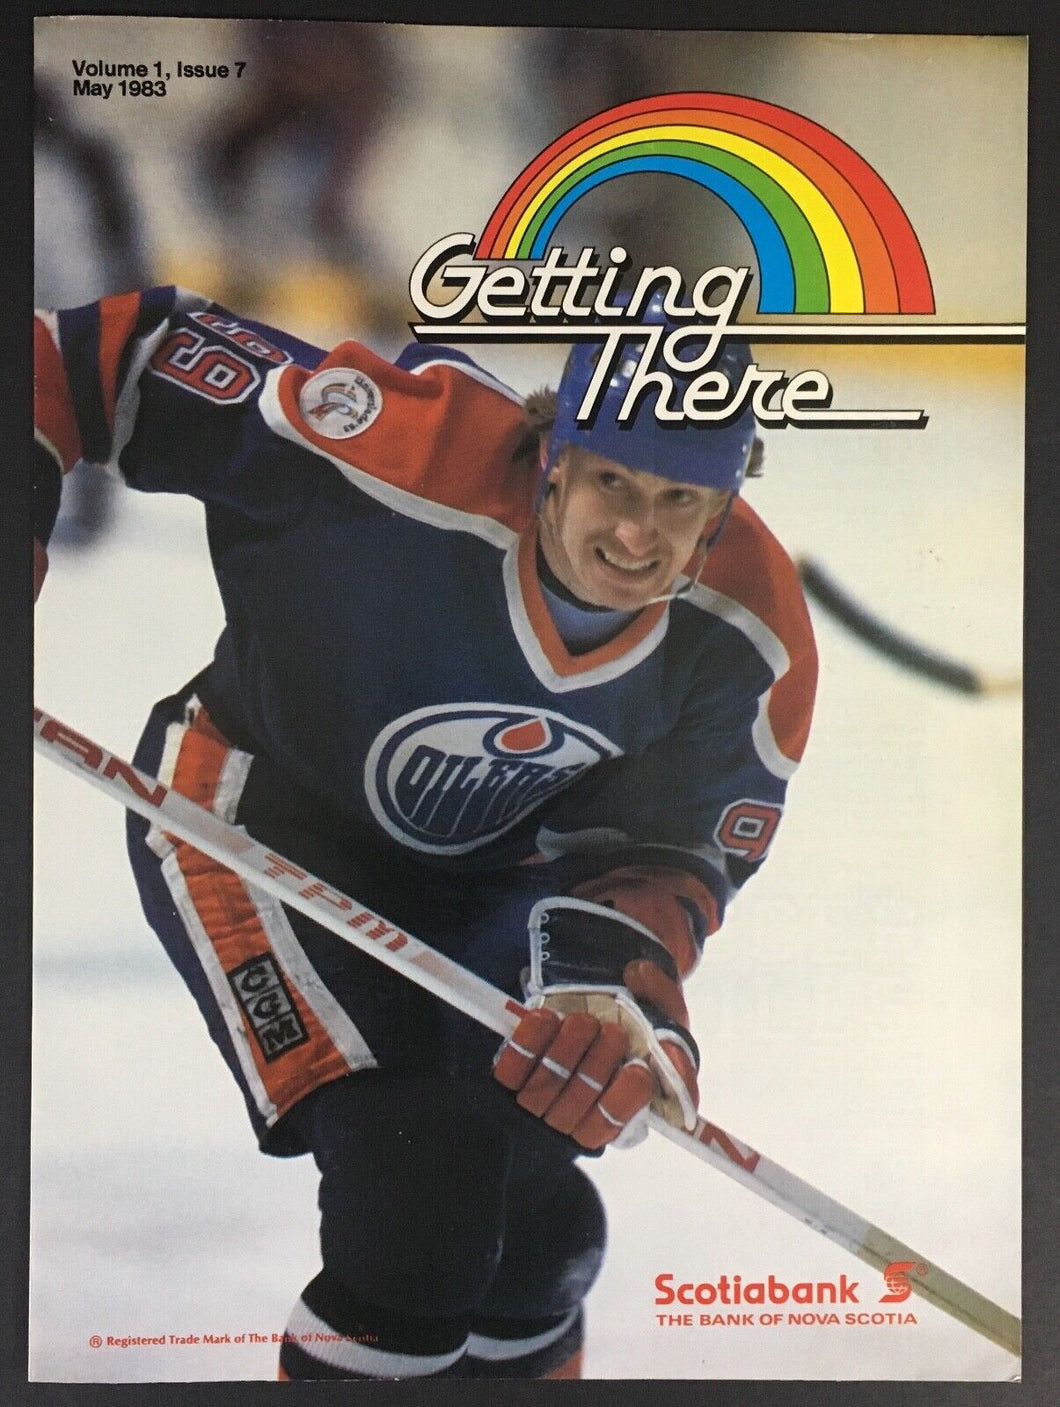 1983 Scotiabank Magazine Wayne Gretzky Cover Edmonton Oilers Hockey NHL